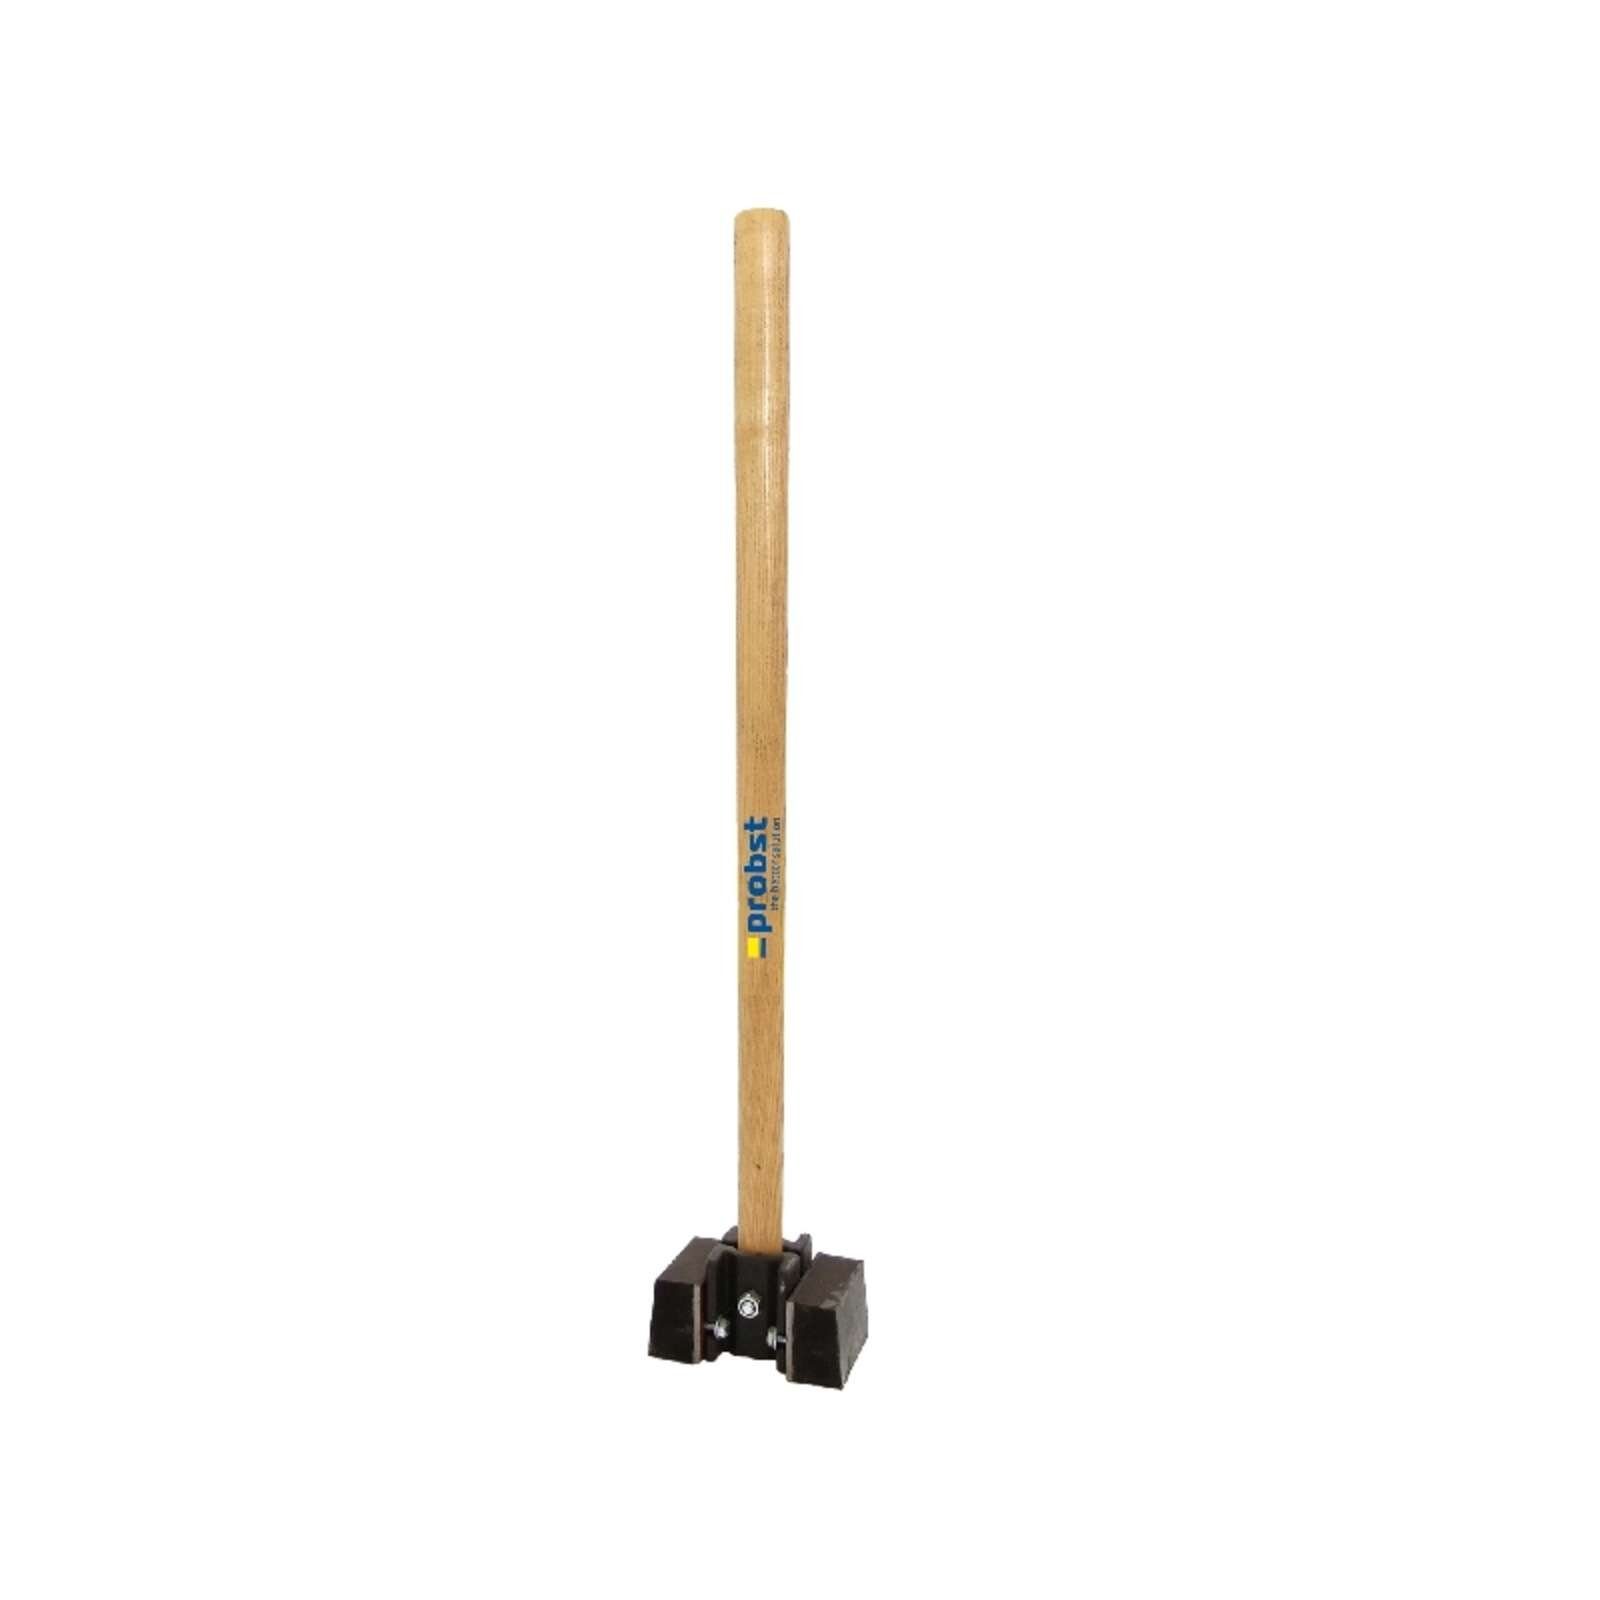 HaWe Hammer Gummi-Hammer 230.80 Schonhammer, Plattenlegerhammer, 2,2kg, 800mm